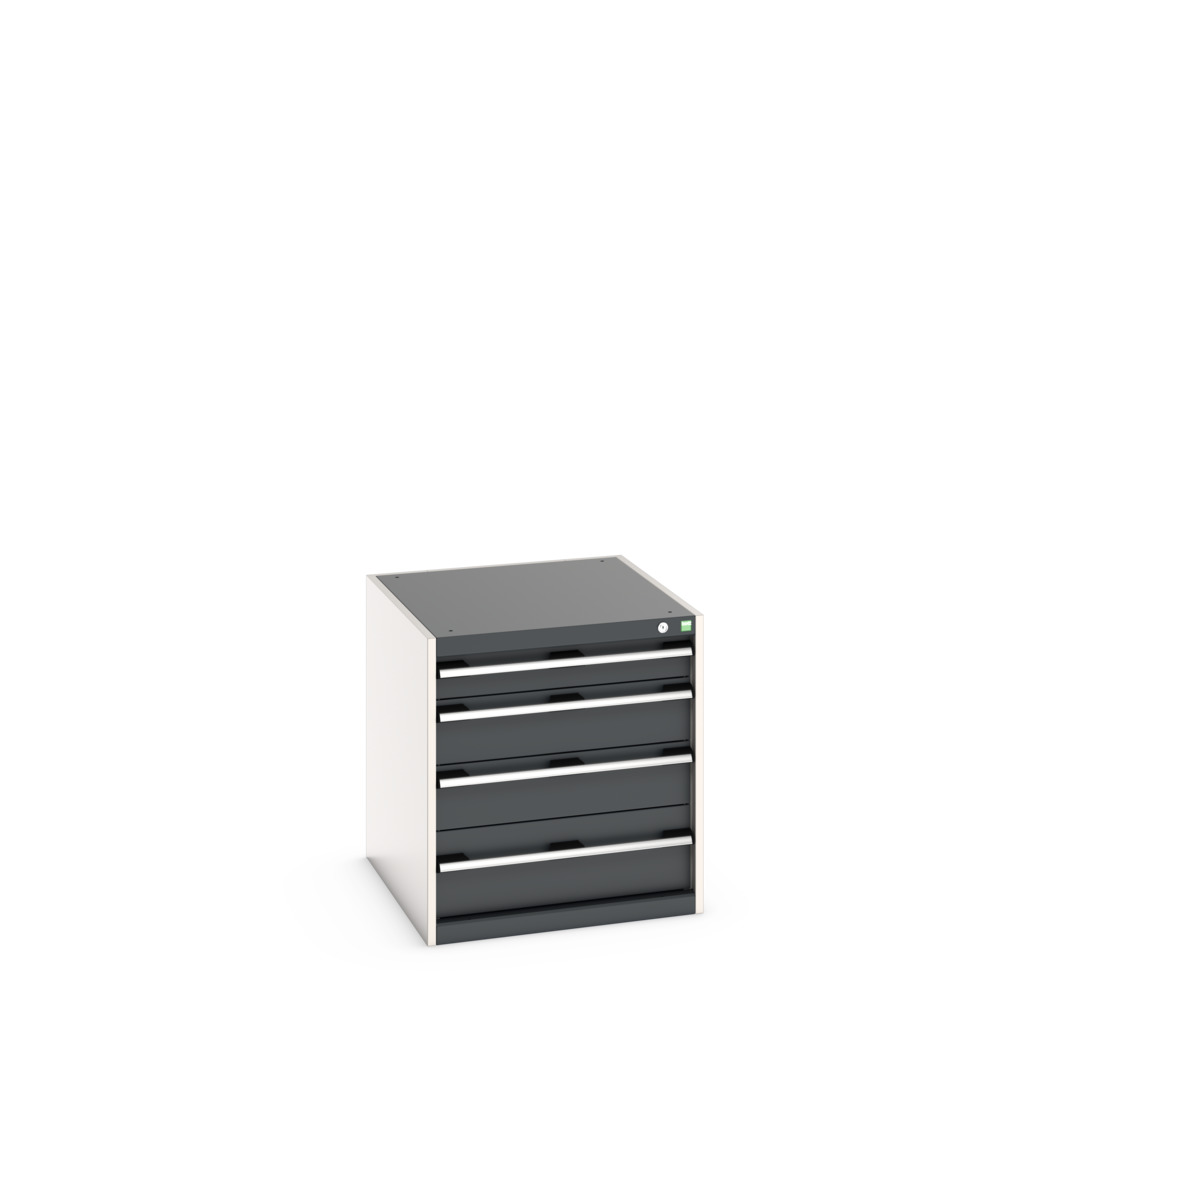 40027005. - cubio drawer cabinet